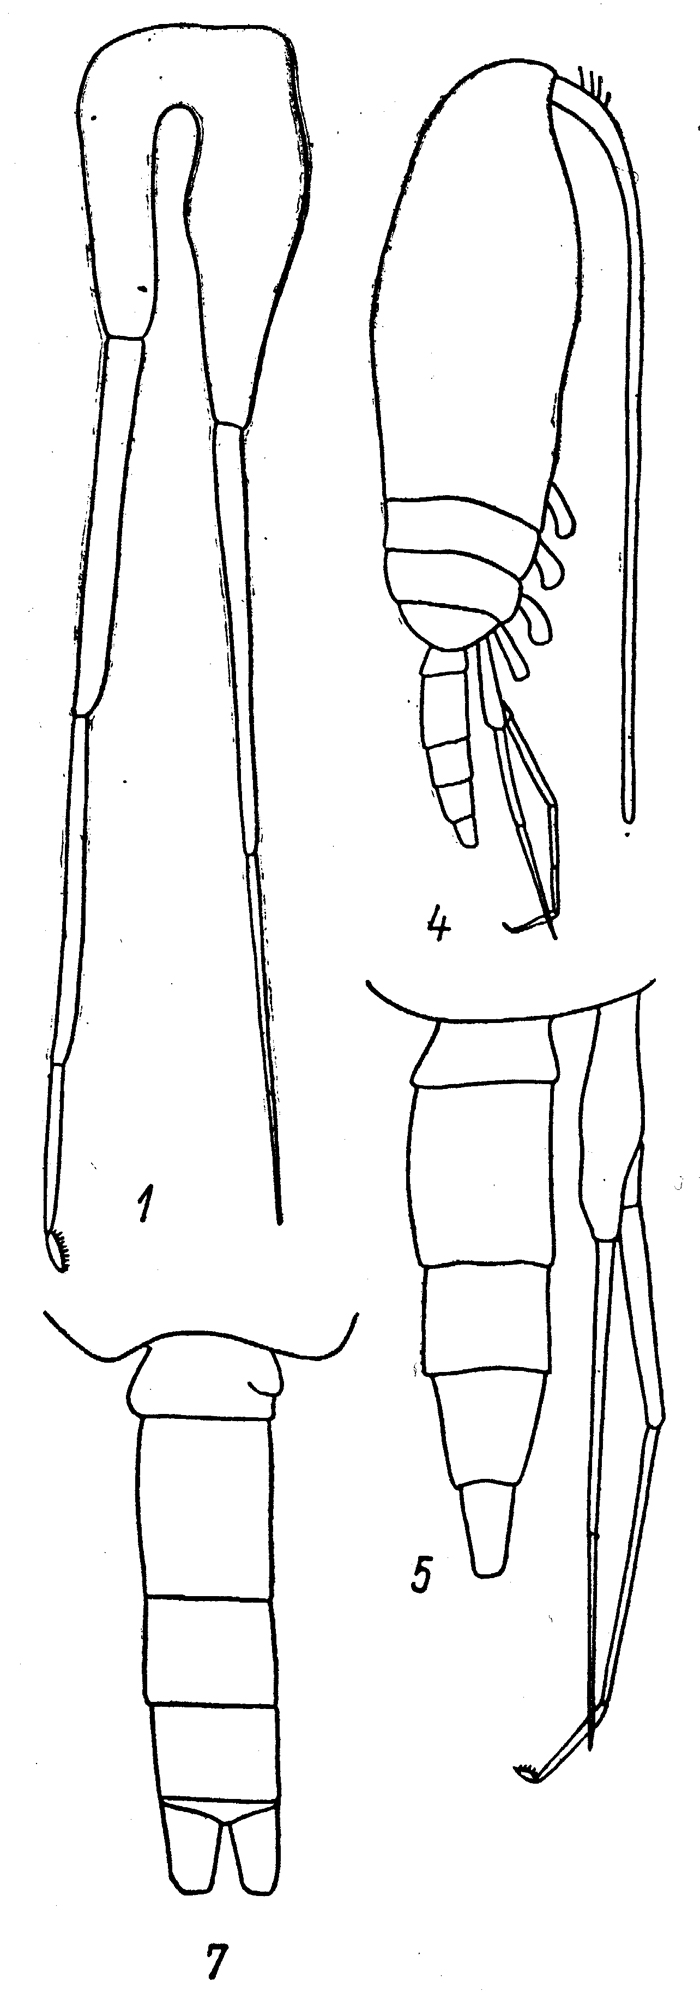 Species Pseudocalanus minutus - Plate 7 of morphological figures